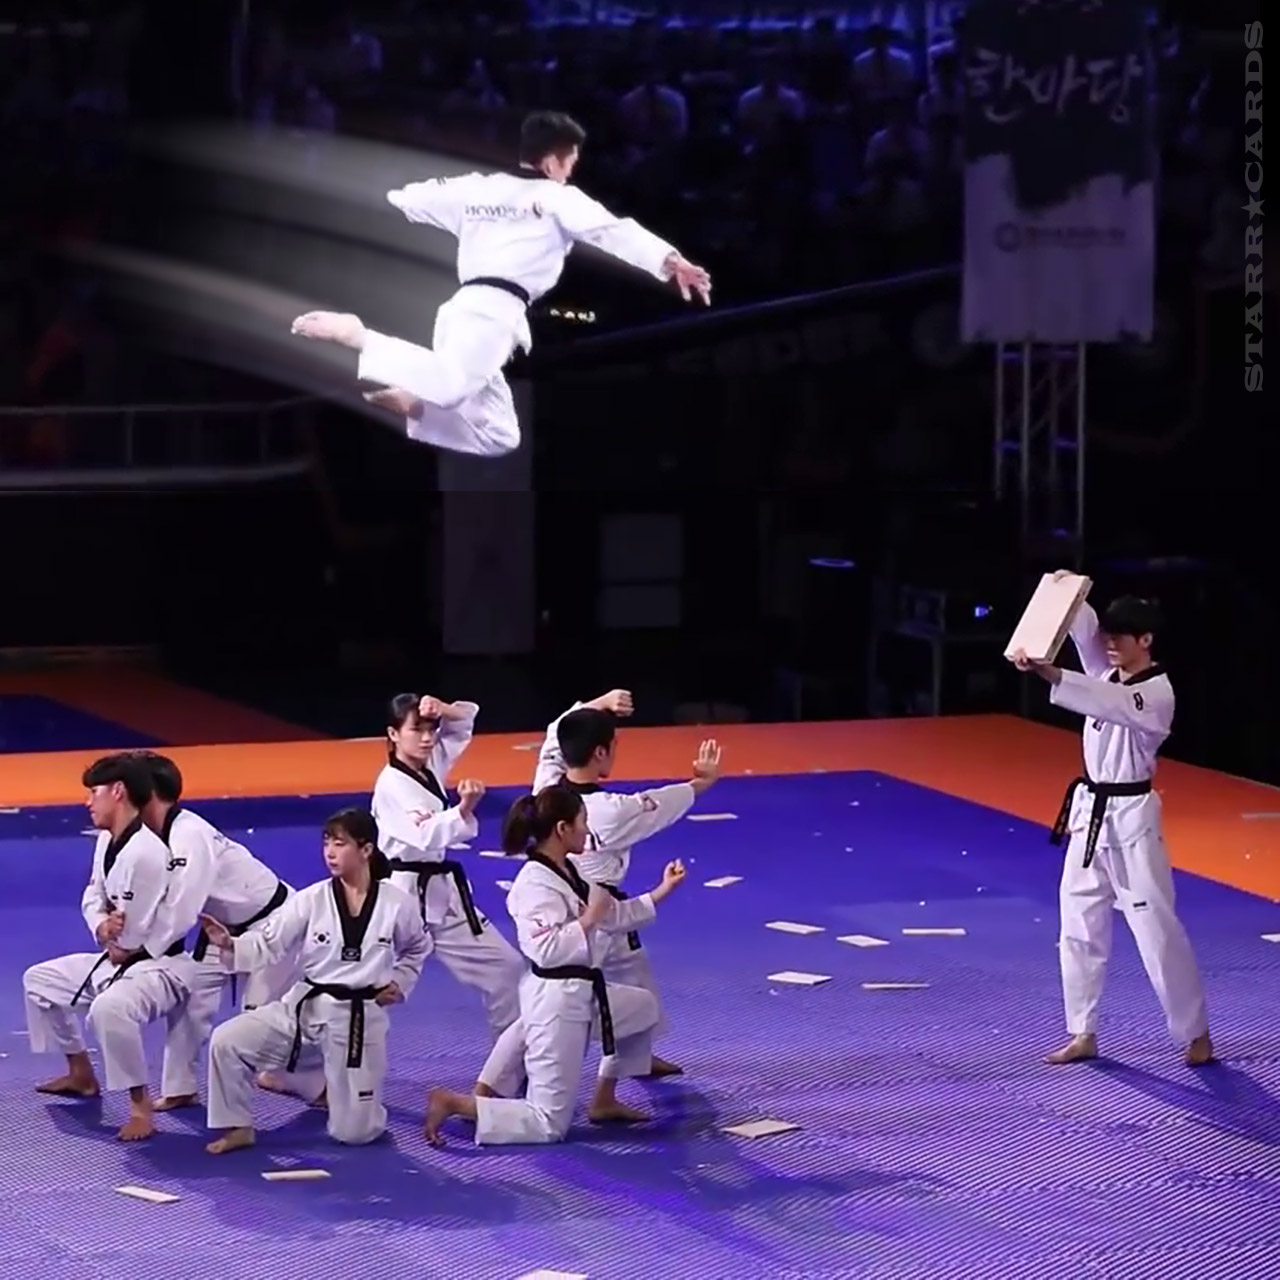 Kukkiwon taekwondo team takes board breaking to whole new heights